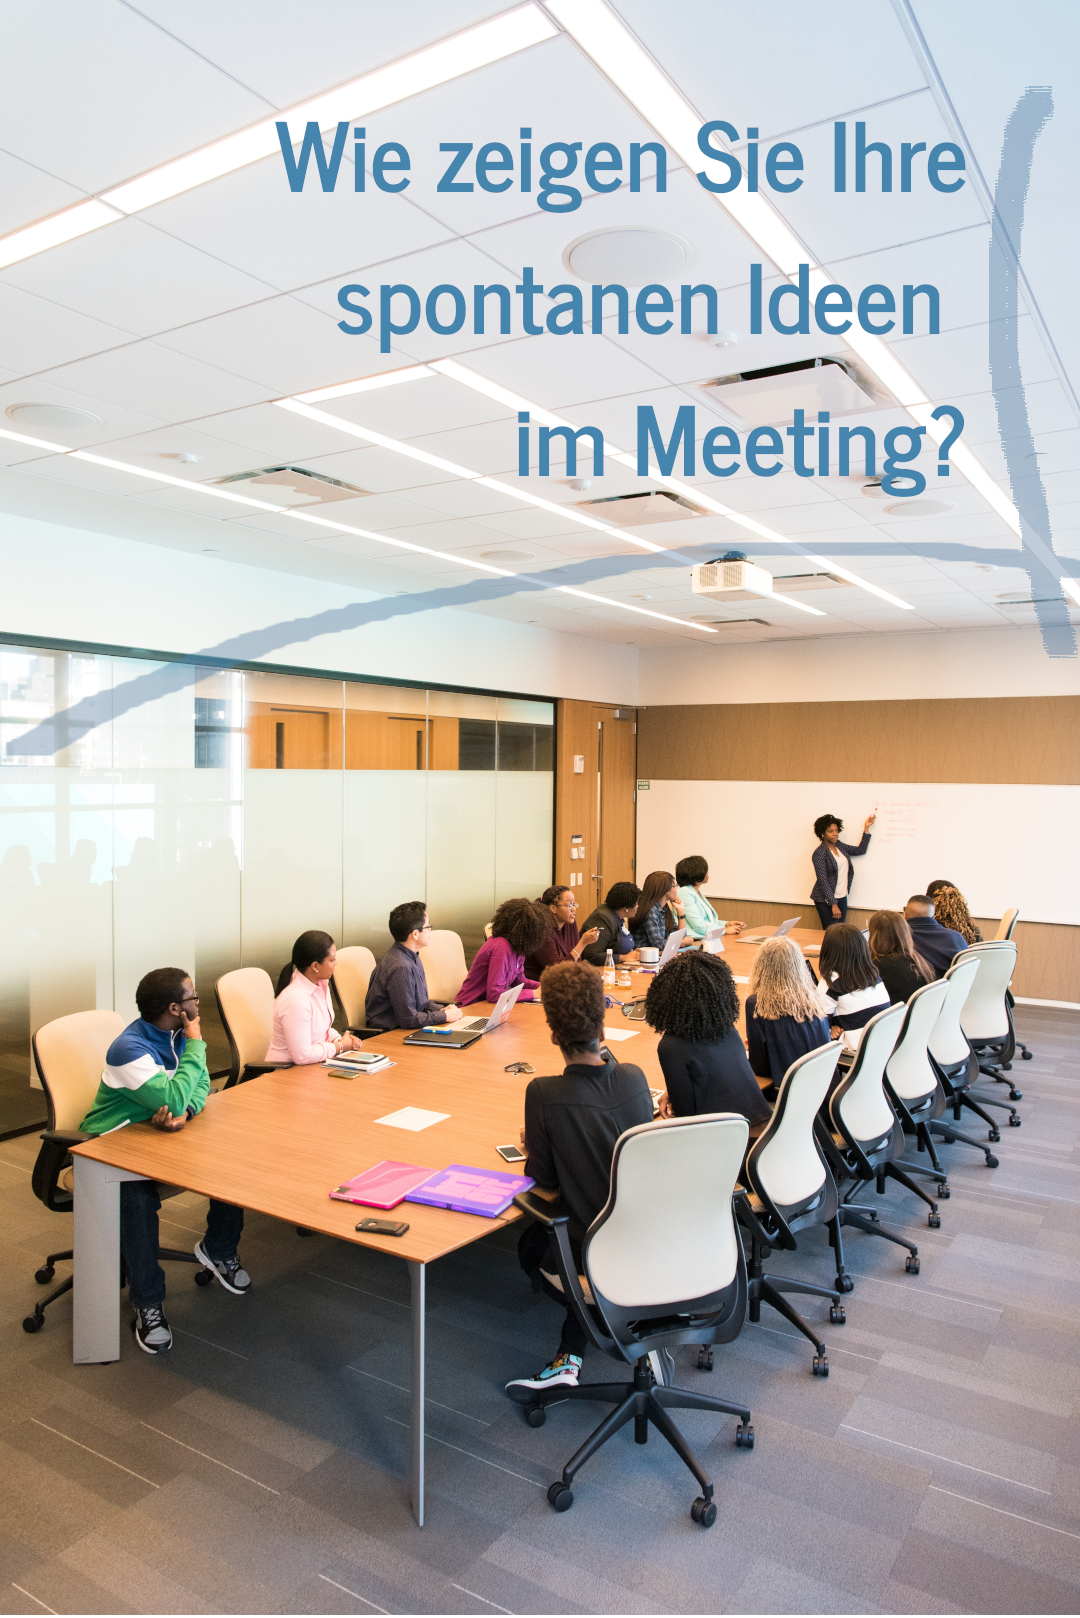 Spontane Ideen in einem Meeting